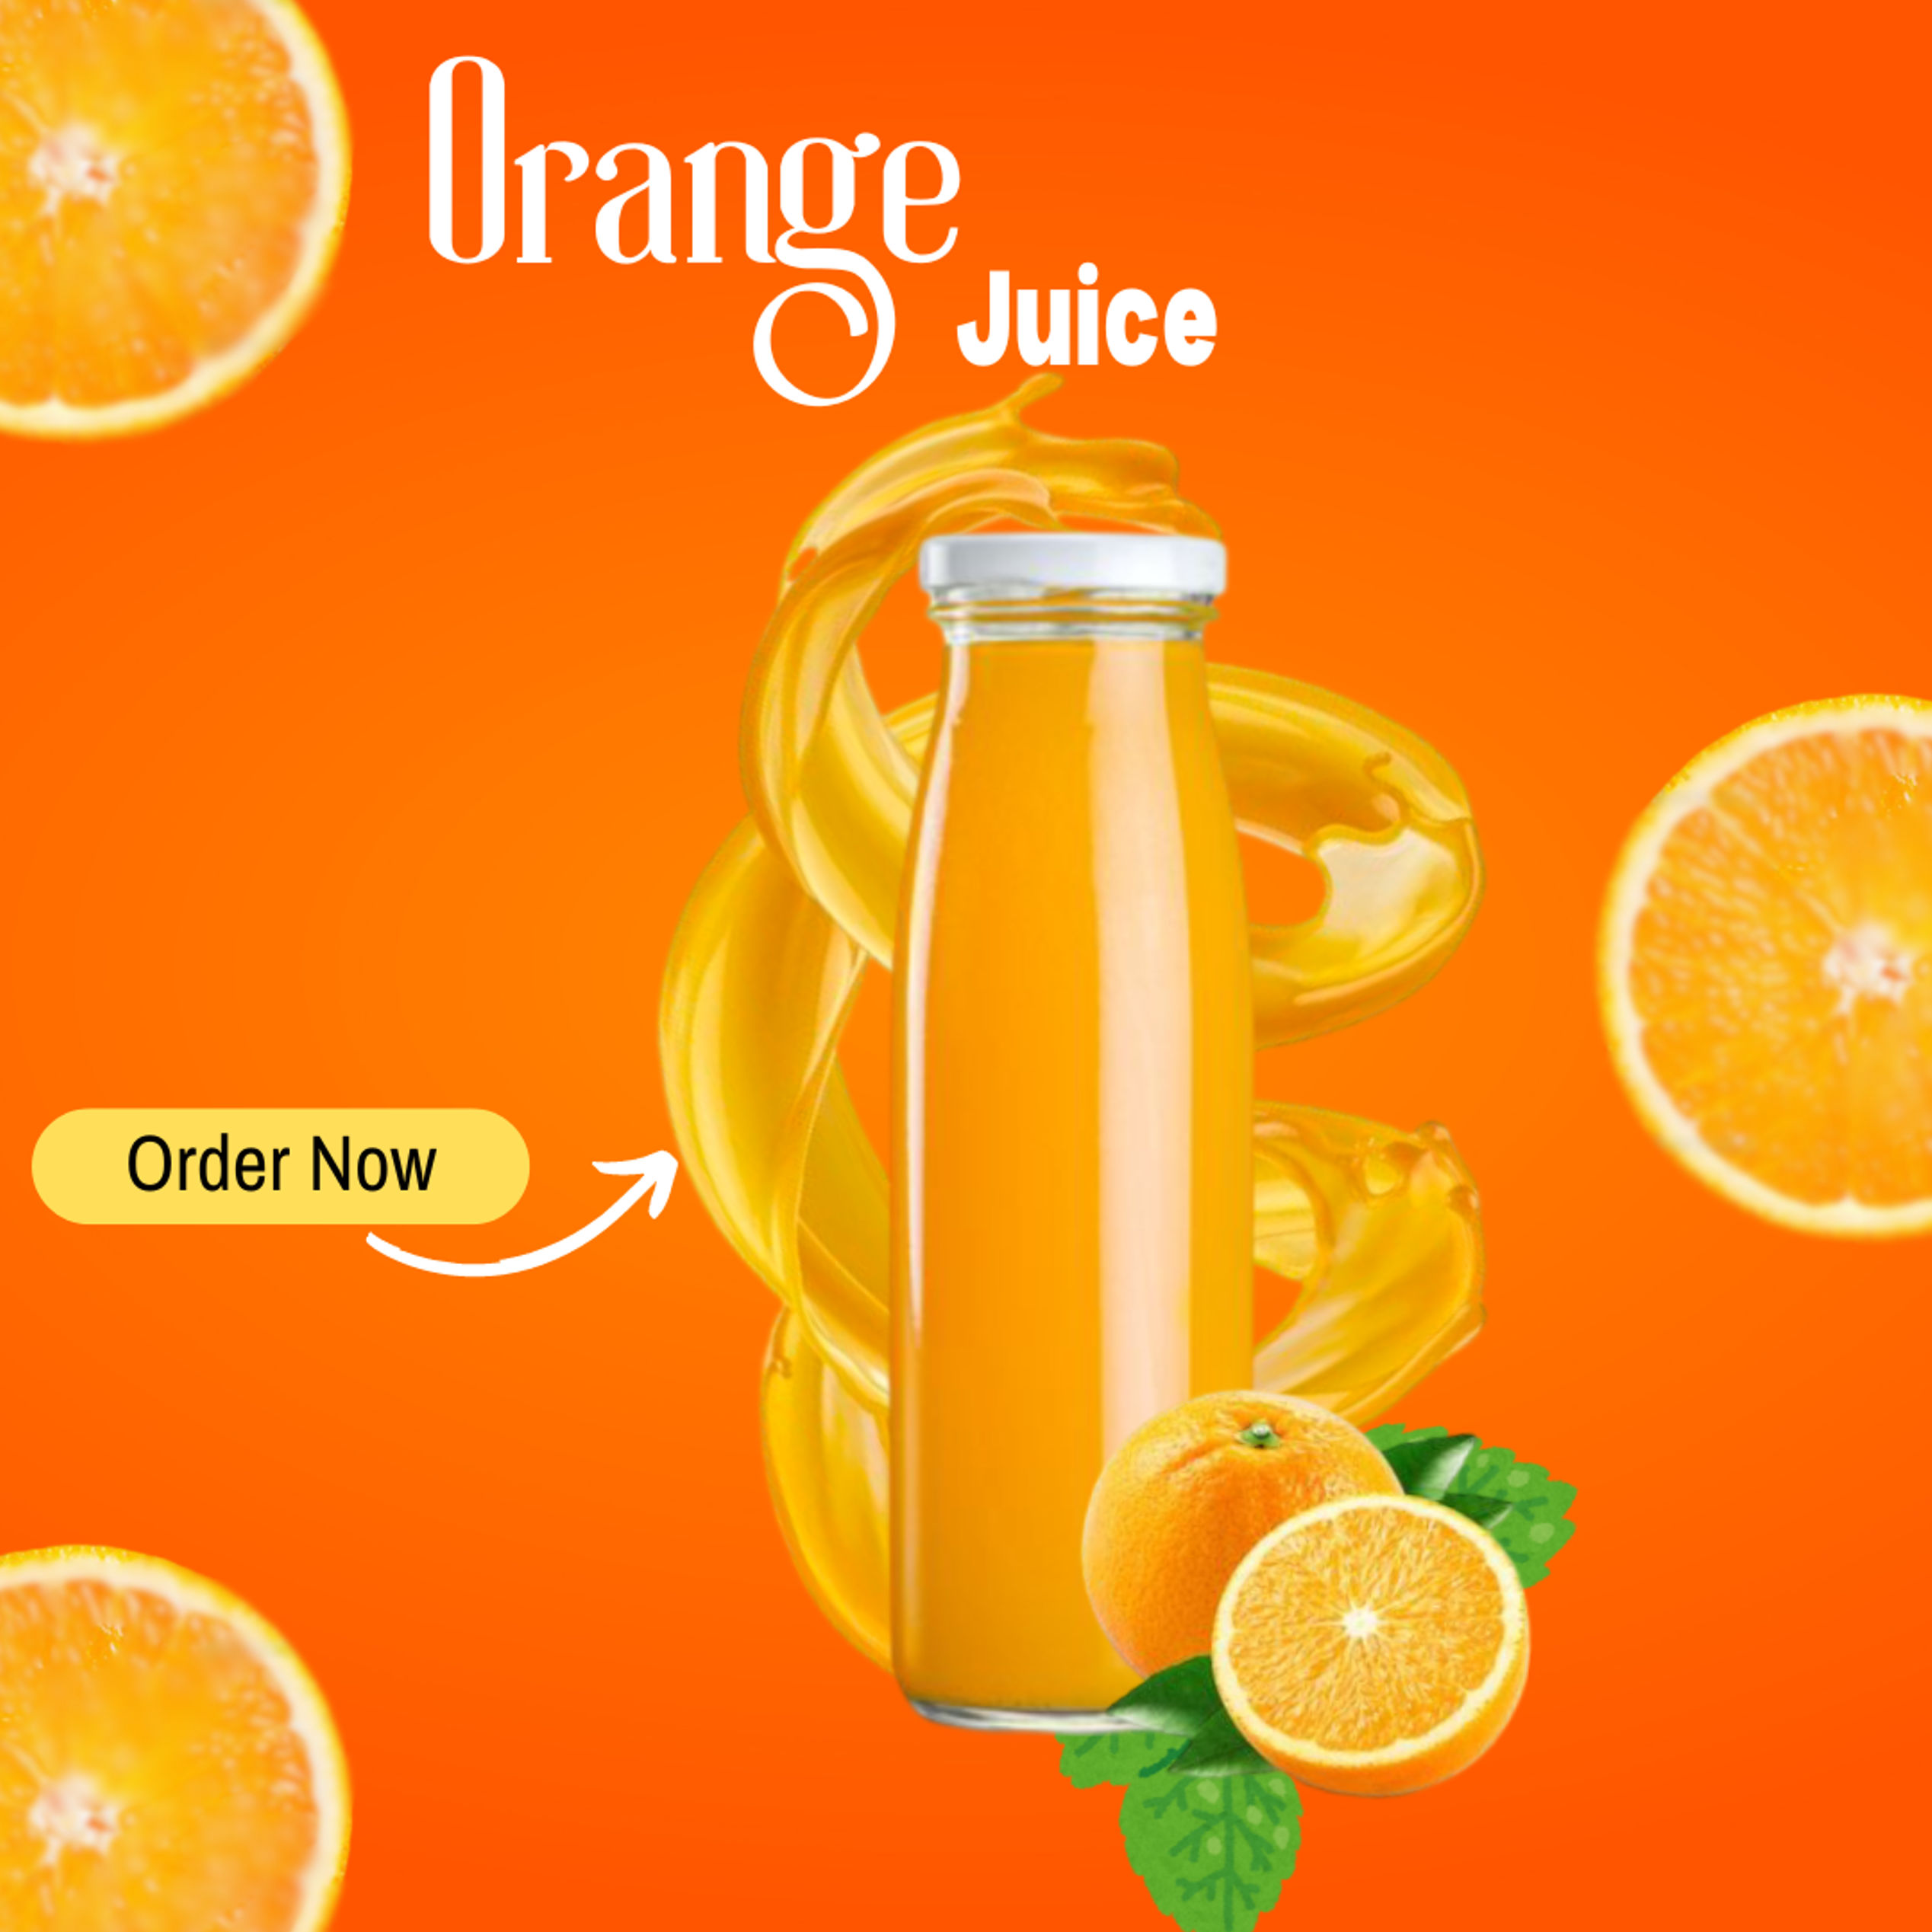 Orange Juice advertising poster cover image.